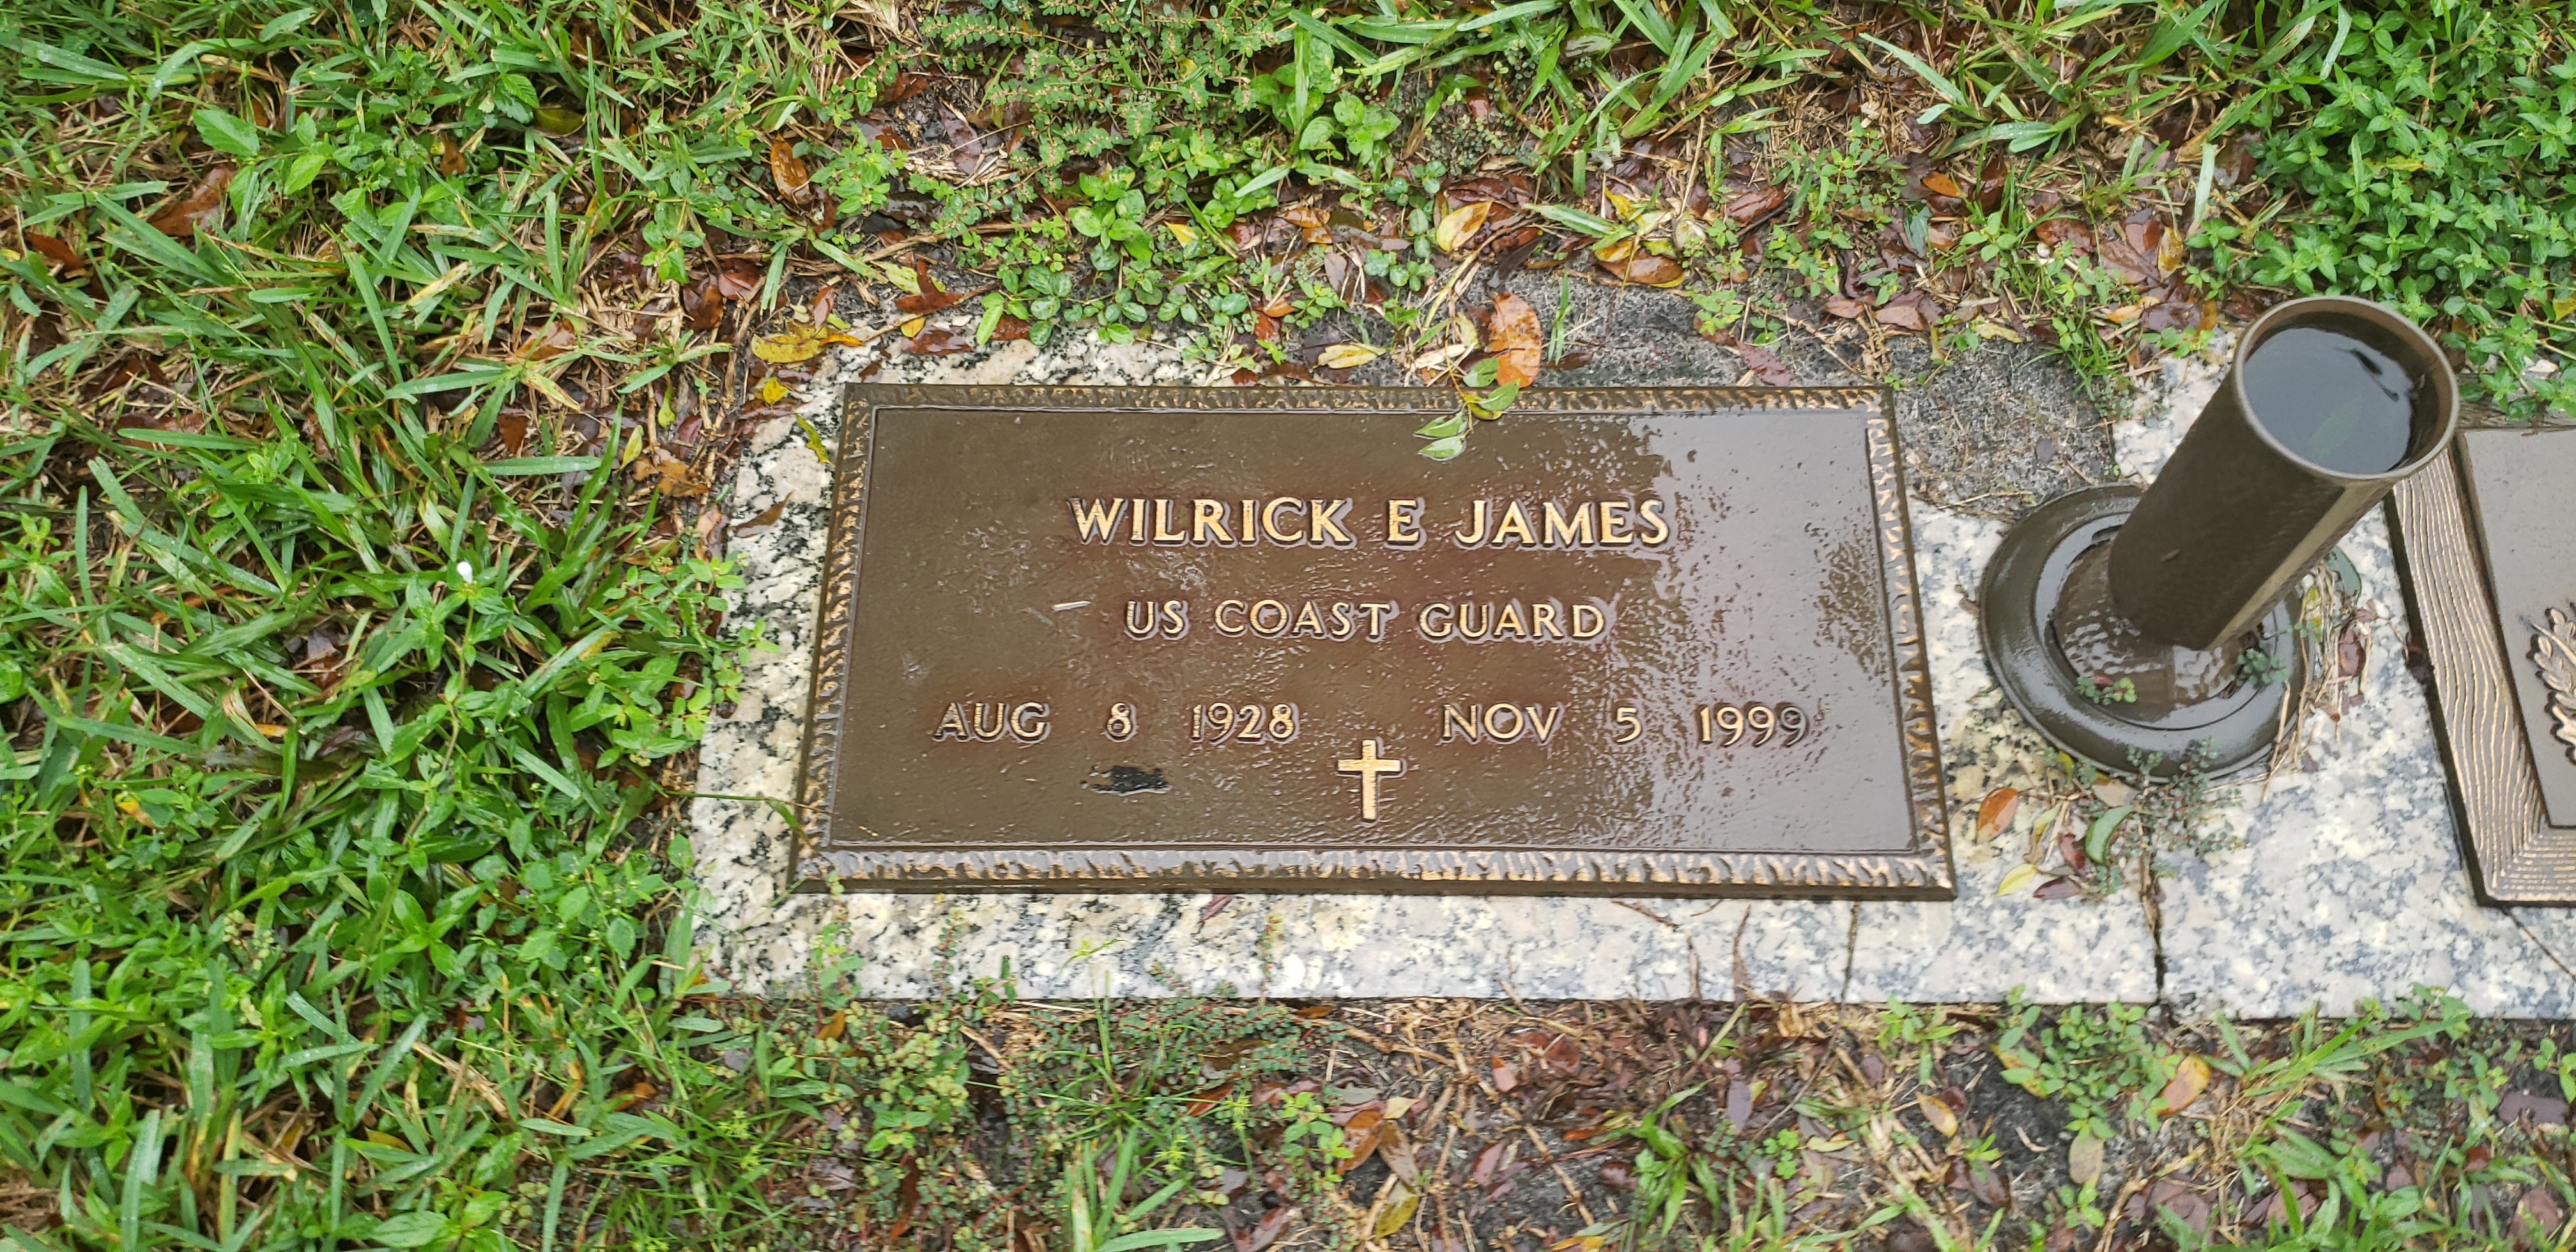 Wilrick E James